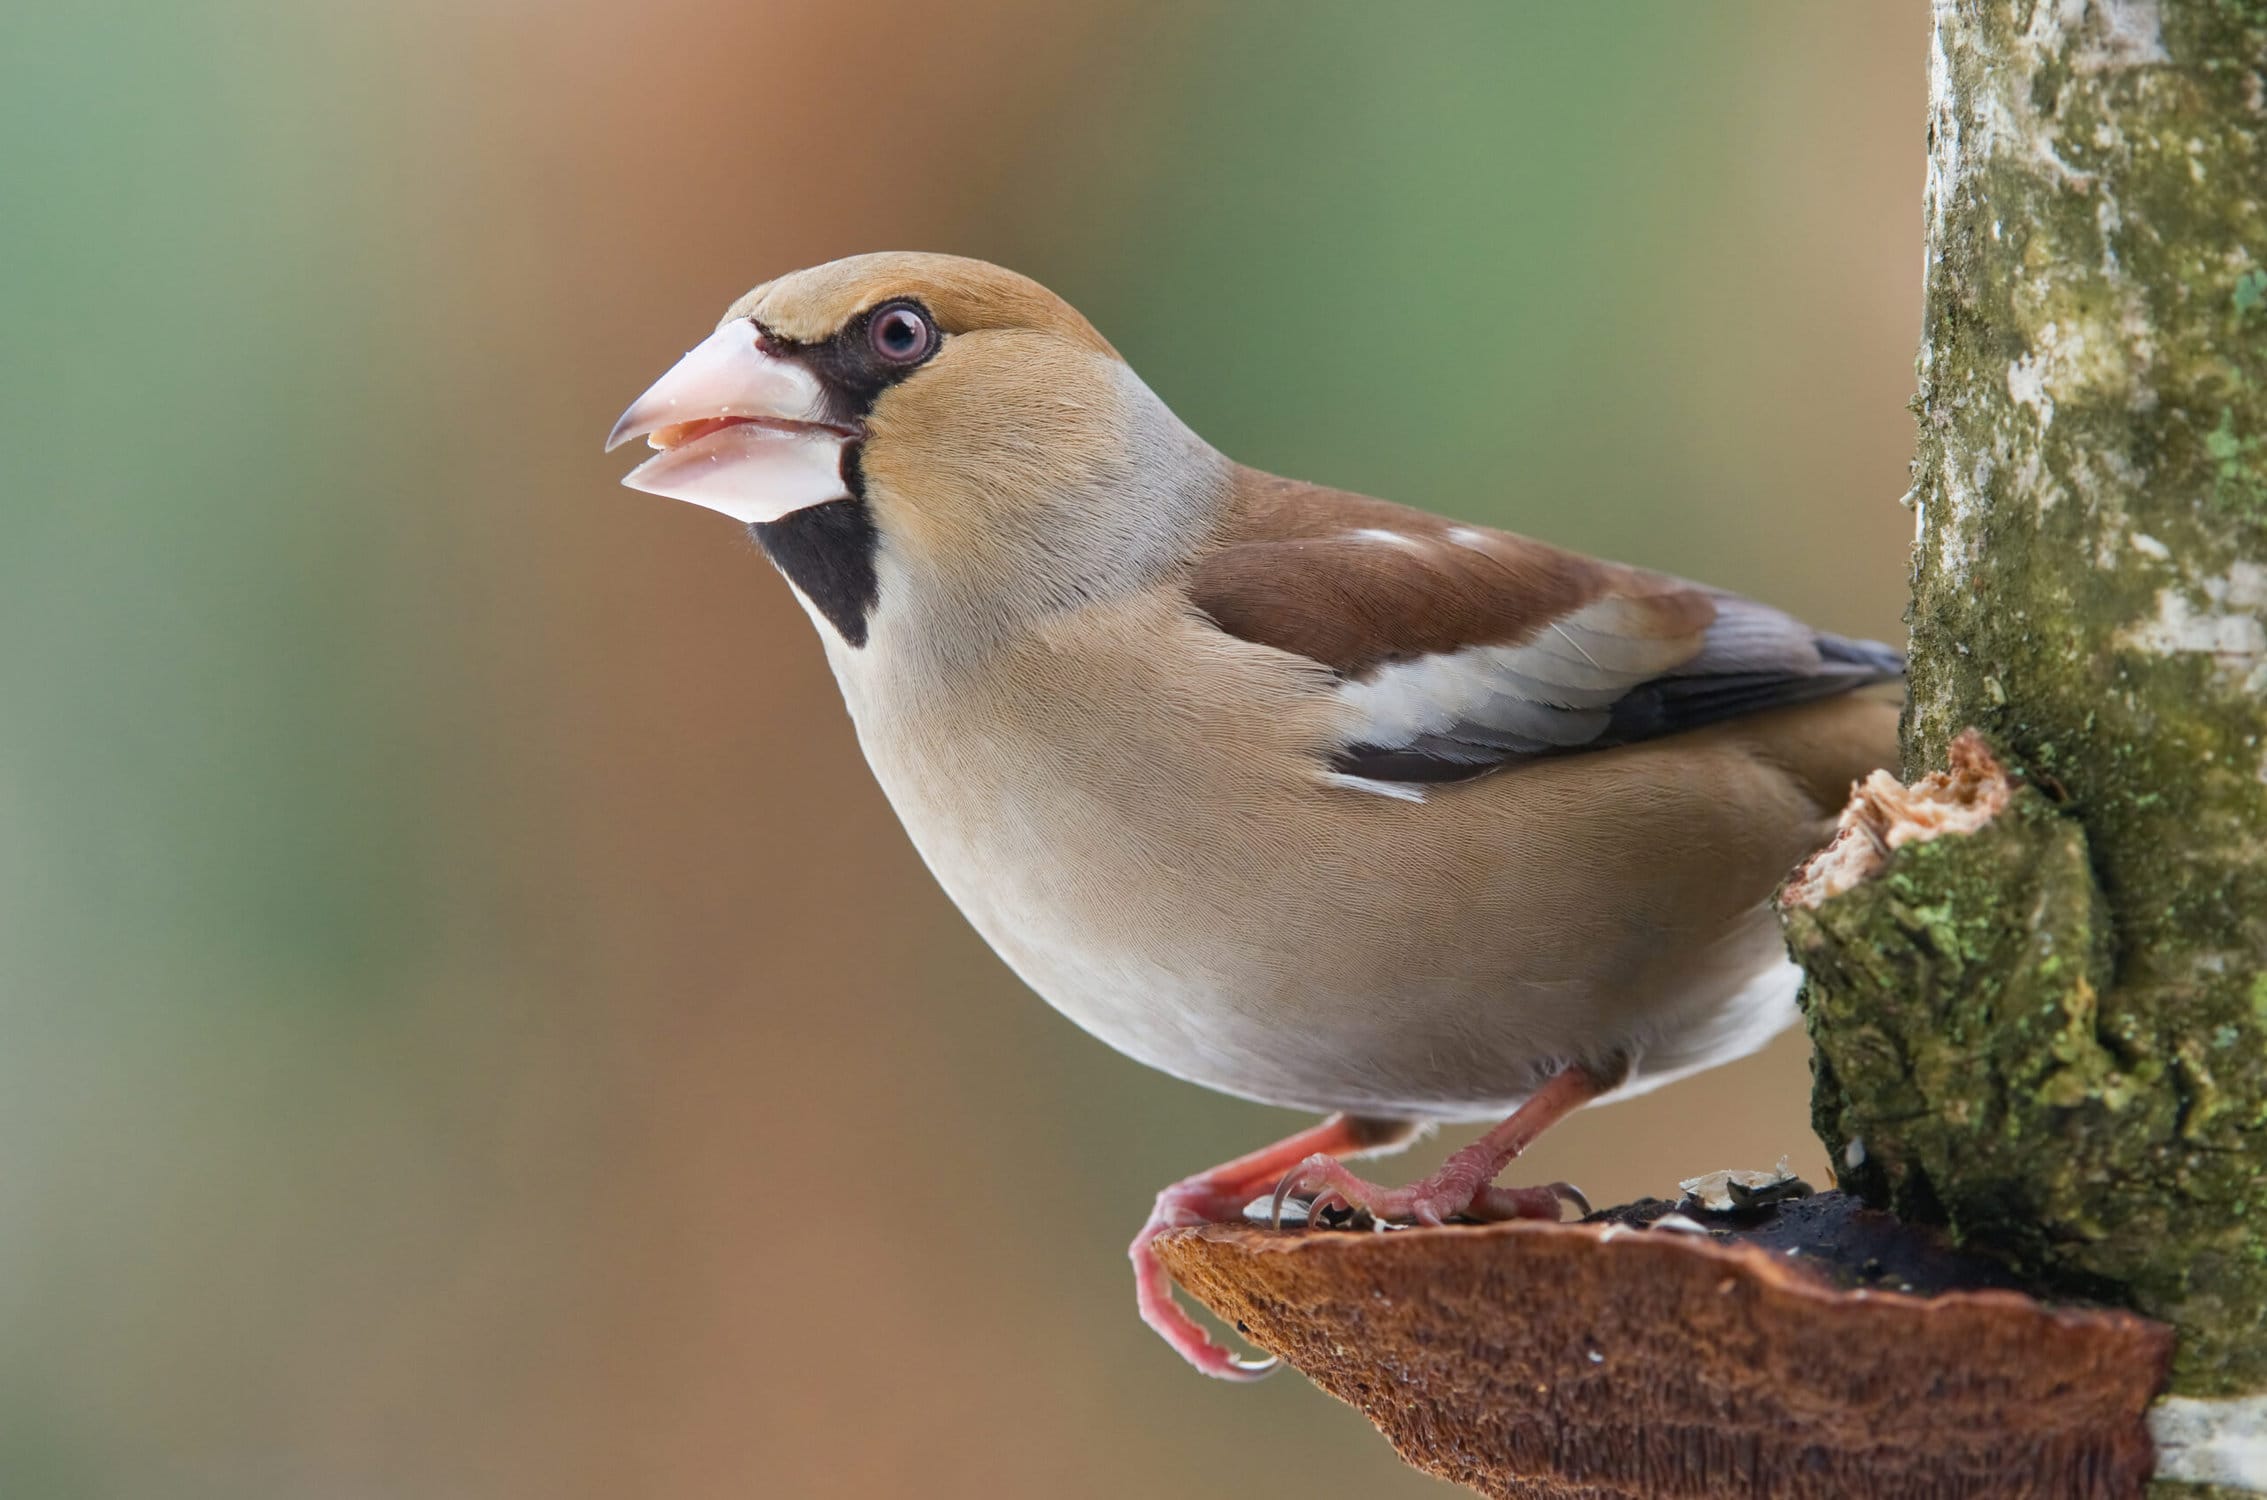 Beak Form Helps Predict Nest Materials Use in International Chook Populations